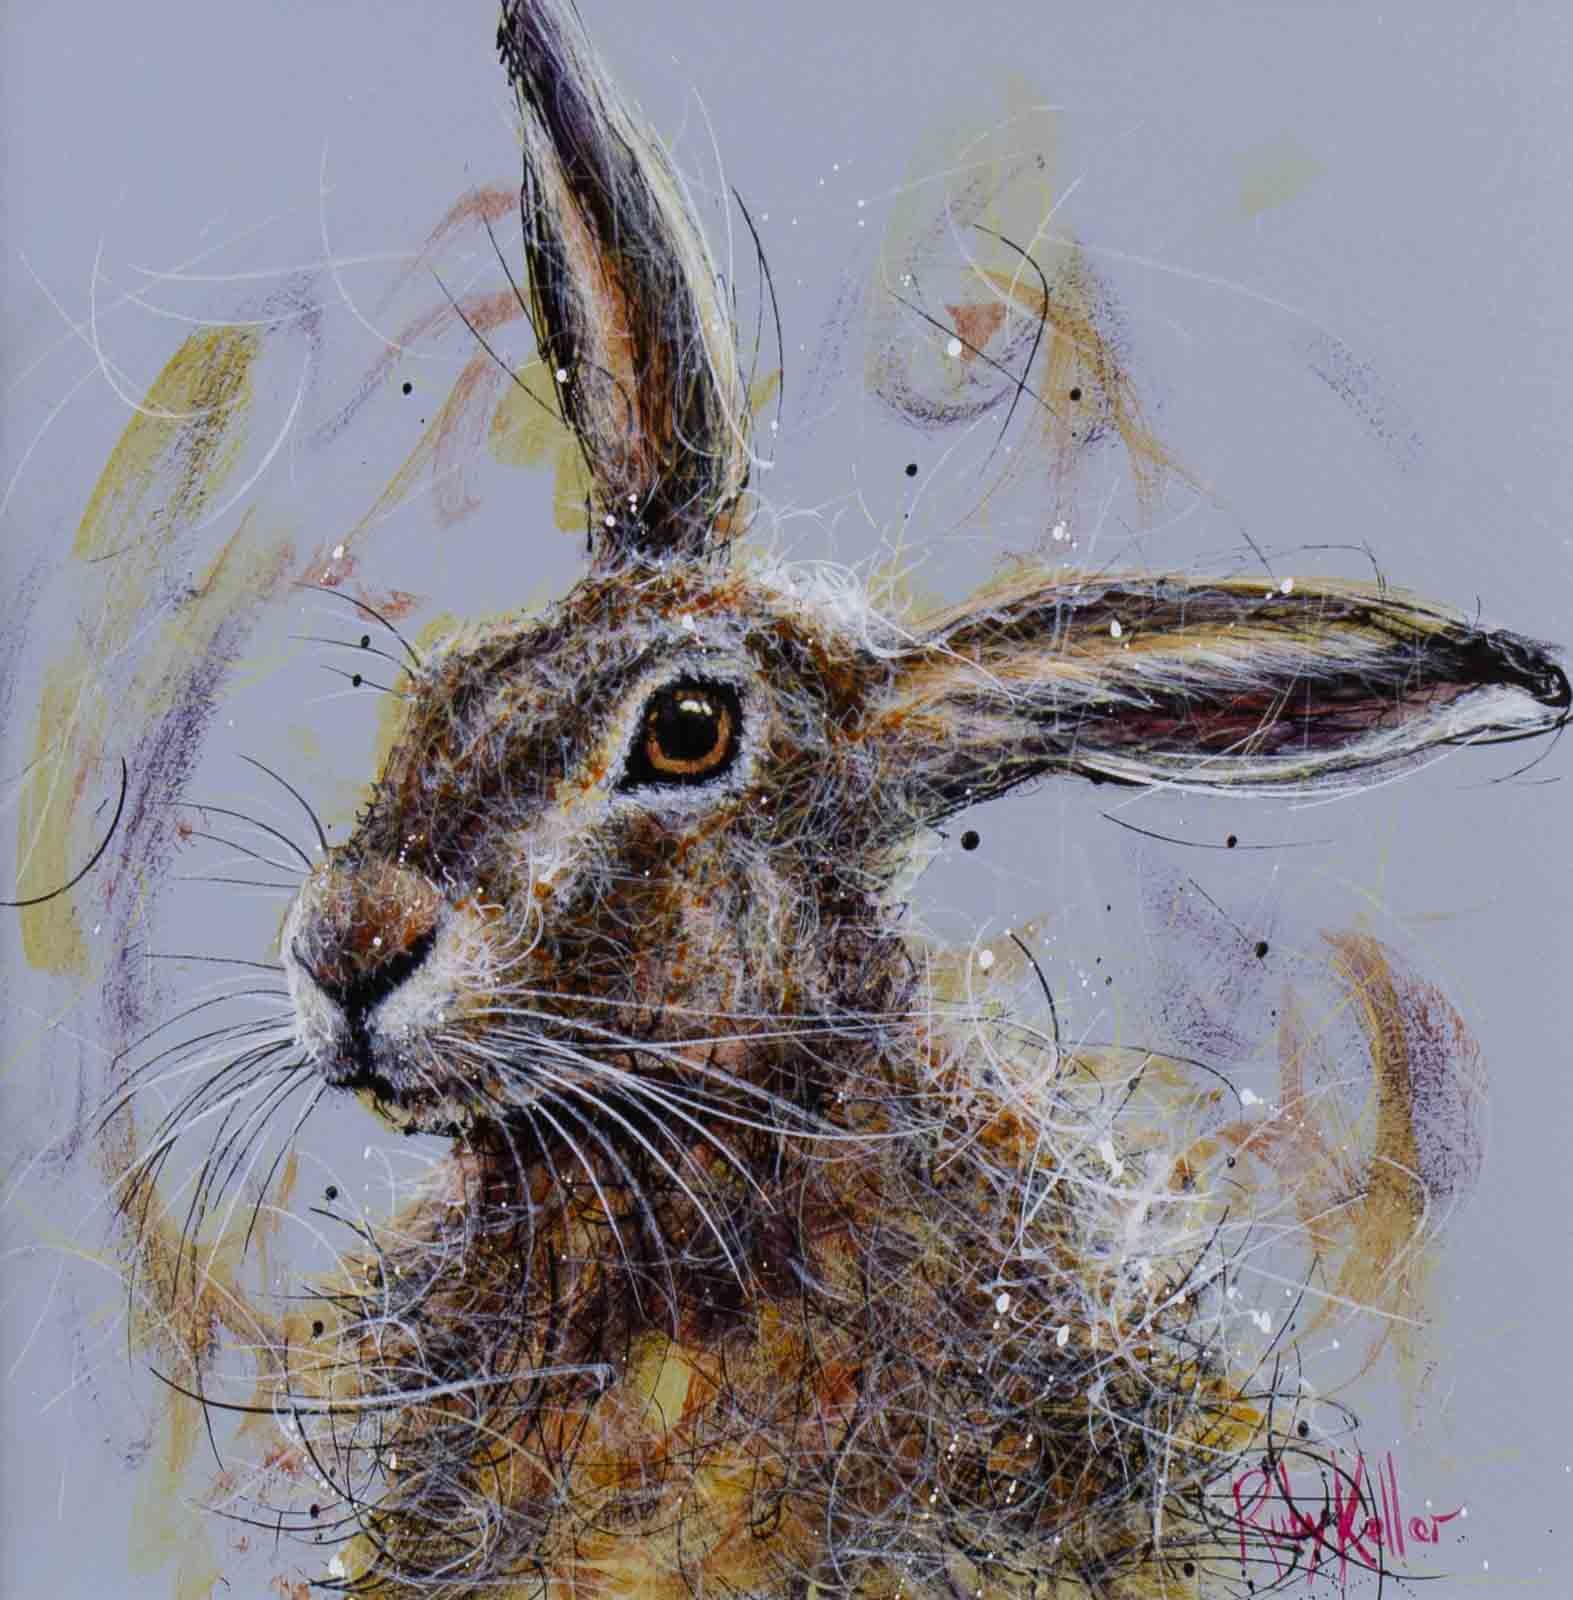 Humphrey the Hare